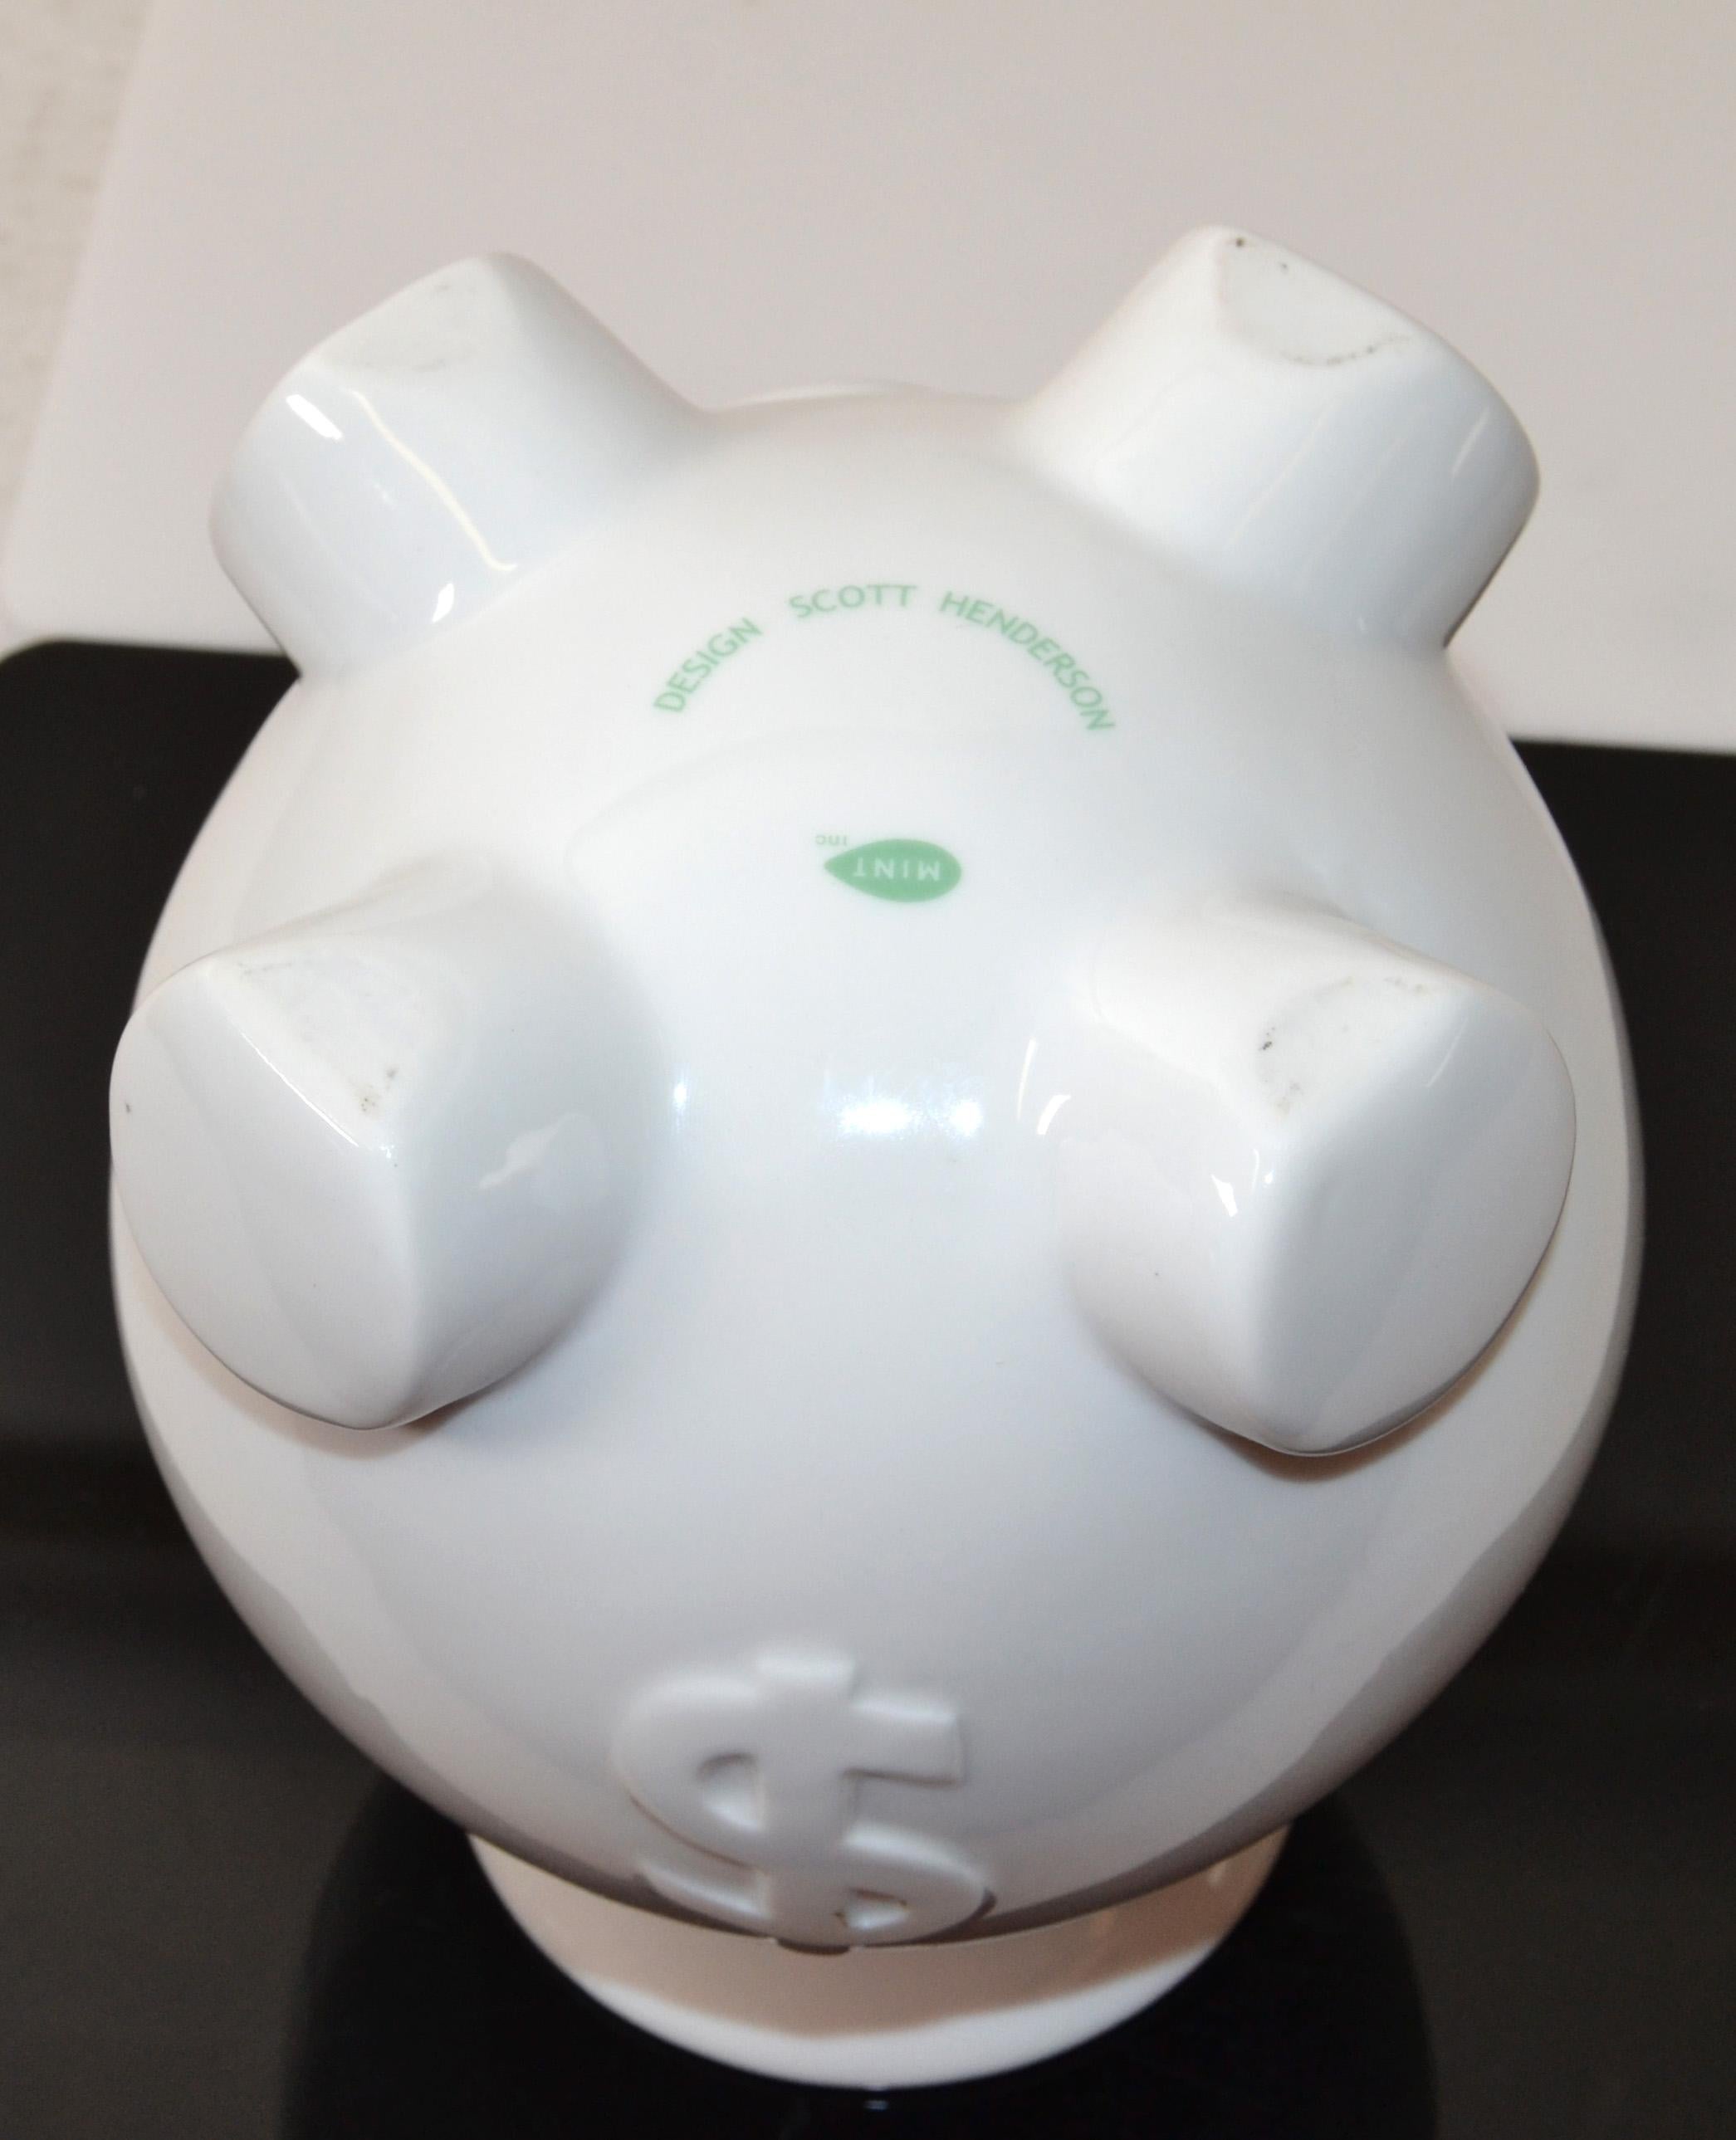 Scott Henderson Design for Mint Inc. White Porcelain Pig Shaped Piggy Bank, 1980 For Sale 2